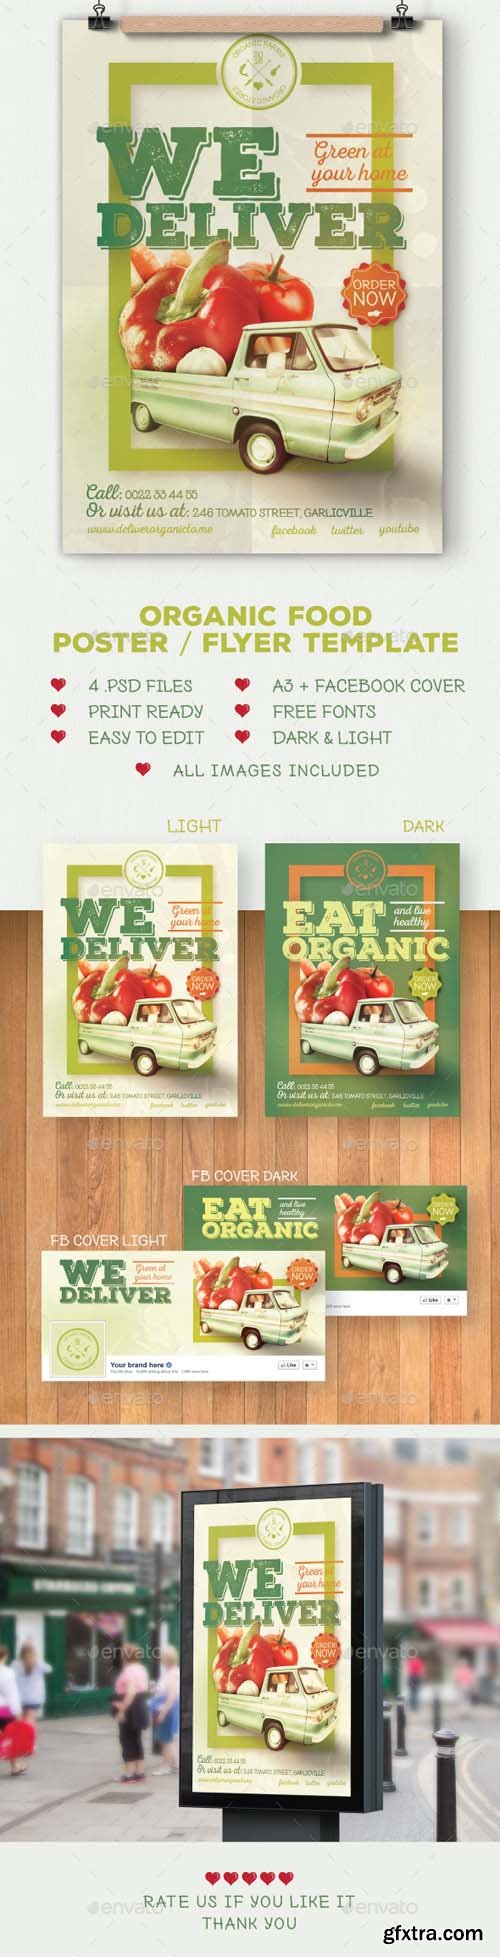 GR - Organic food poster / flyer template 14764471